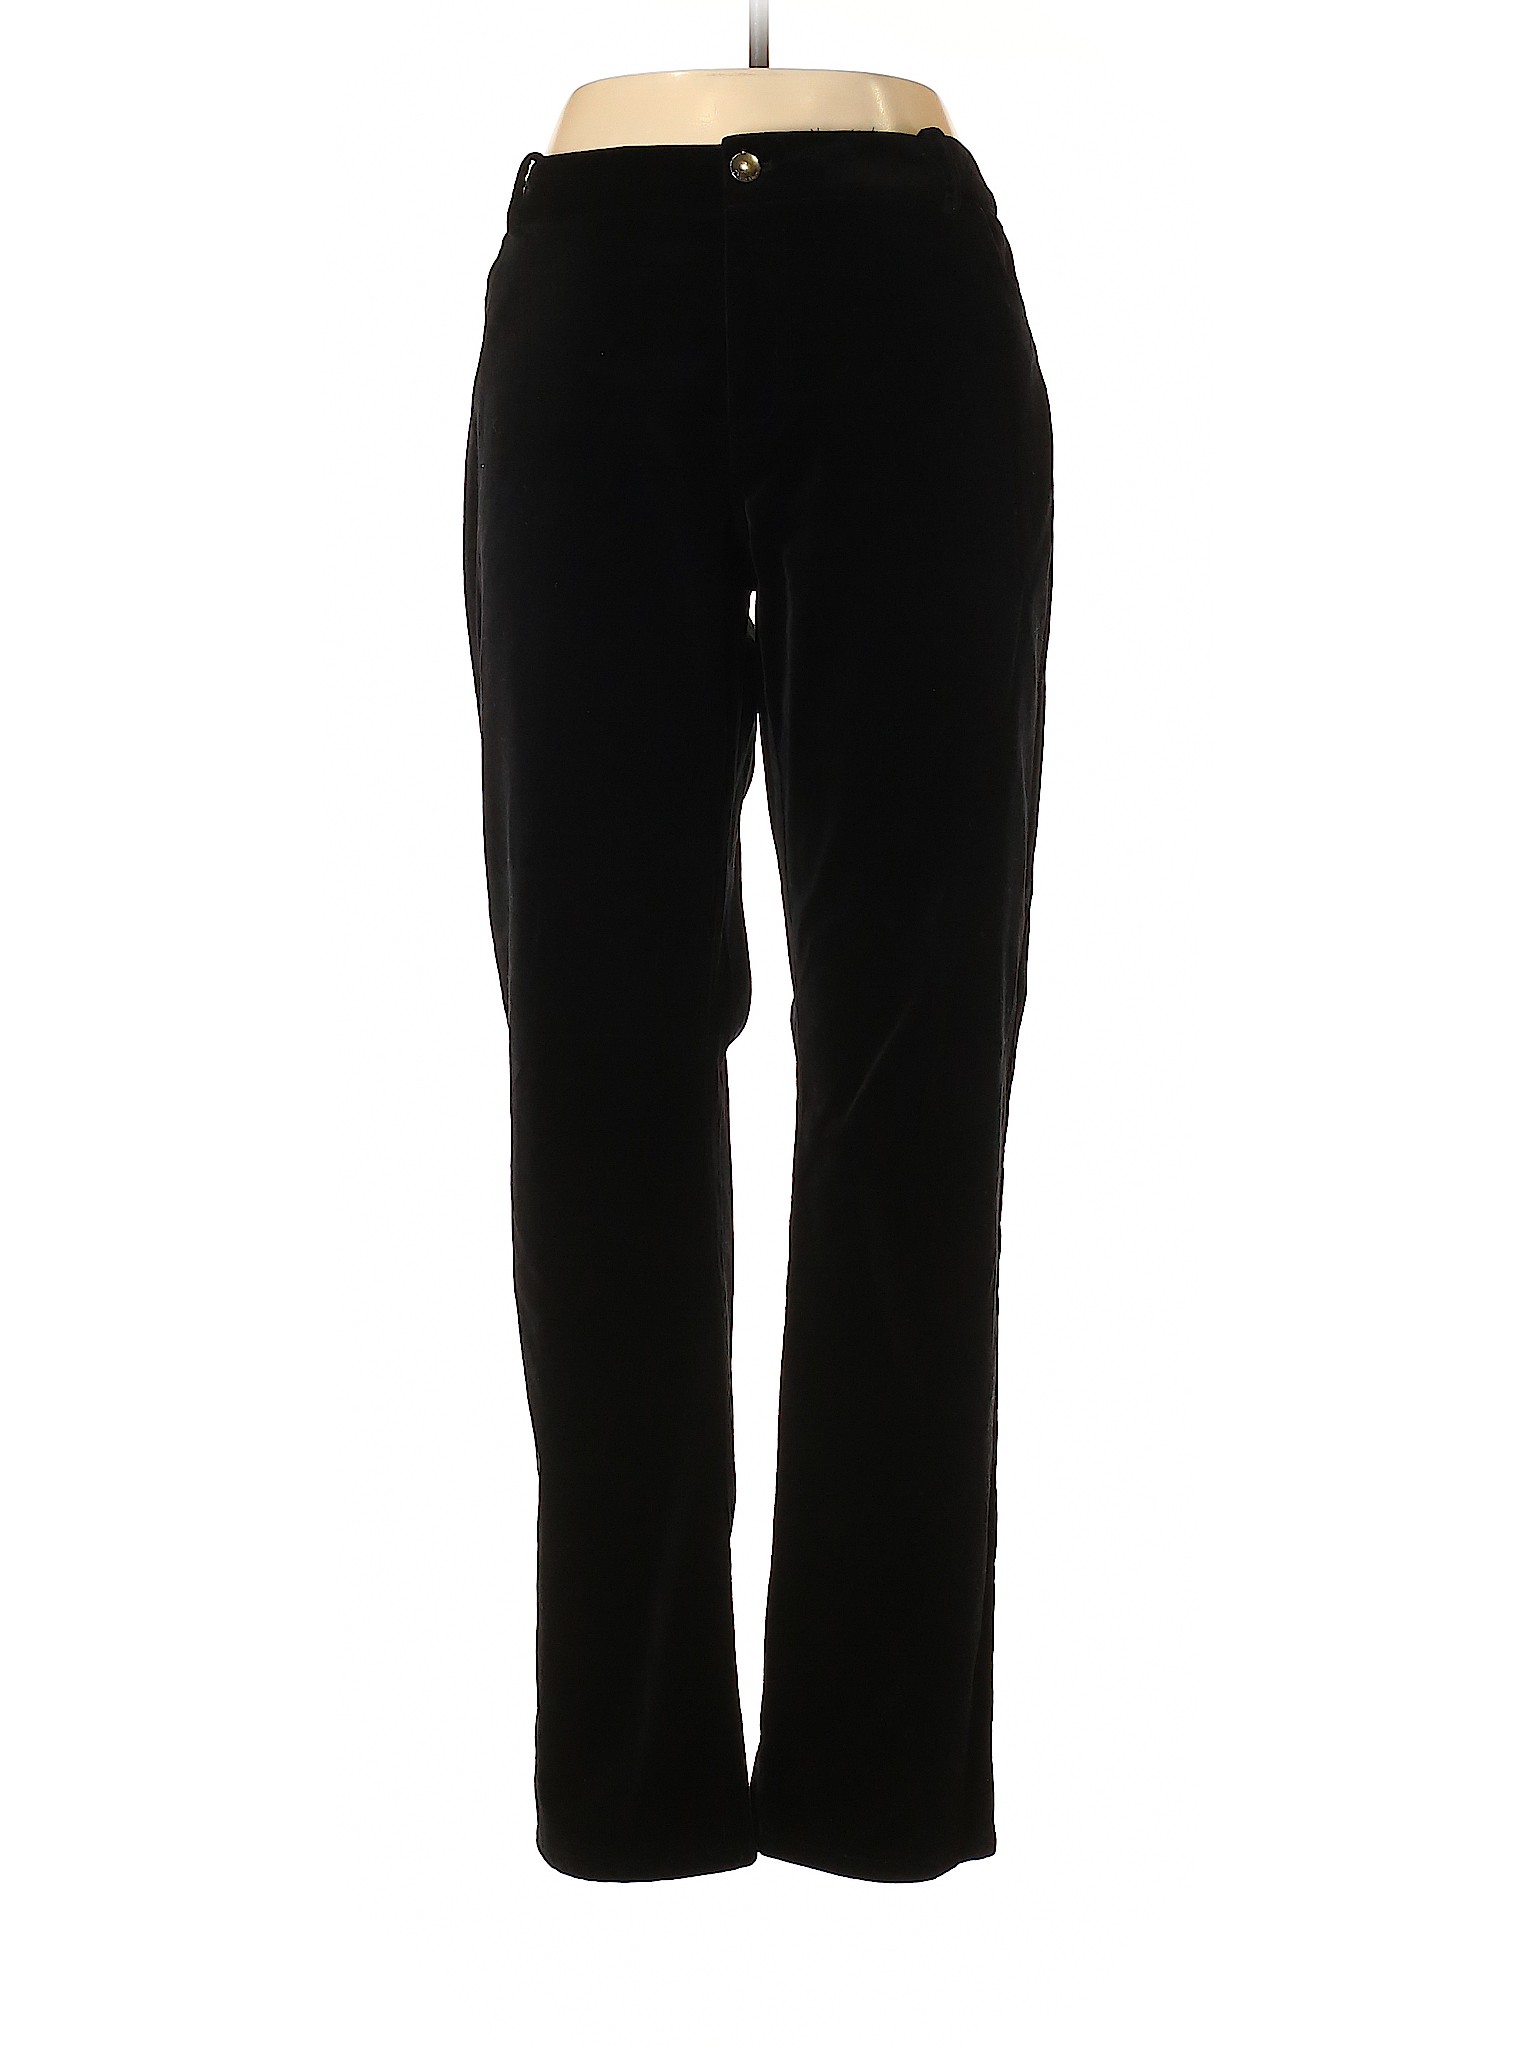 Calvin Klein Women Black Velour Pants 12 | eBay